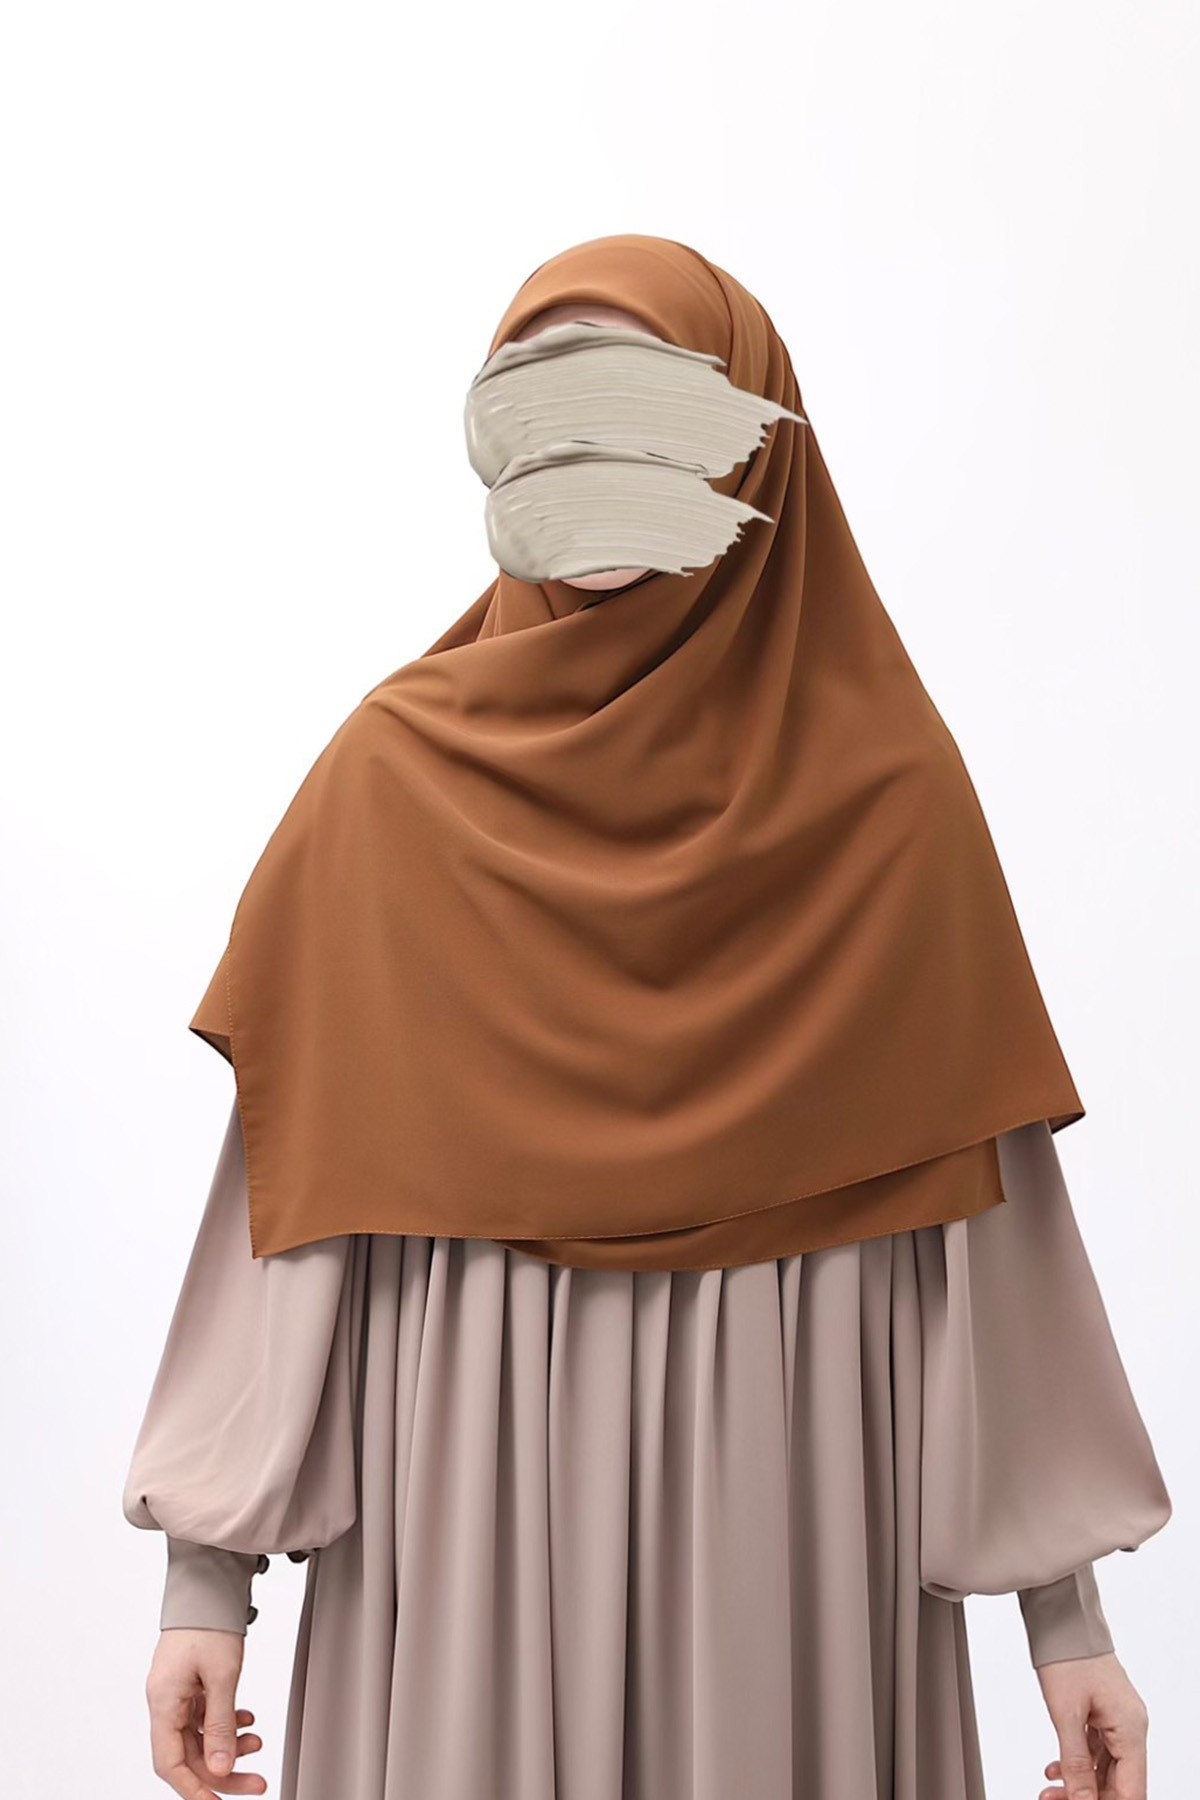 Square Hijab - Cinnamon